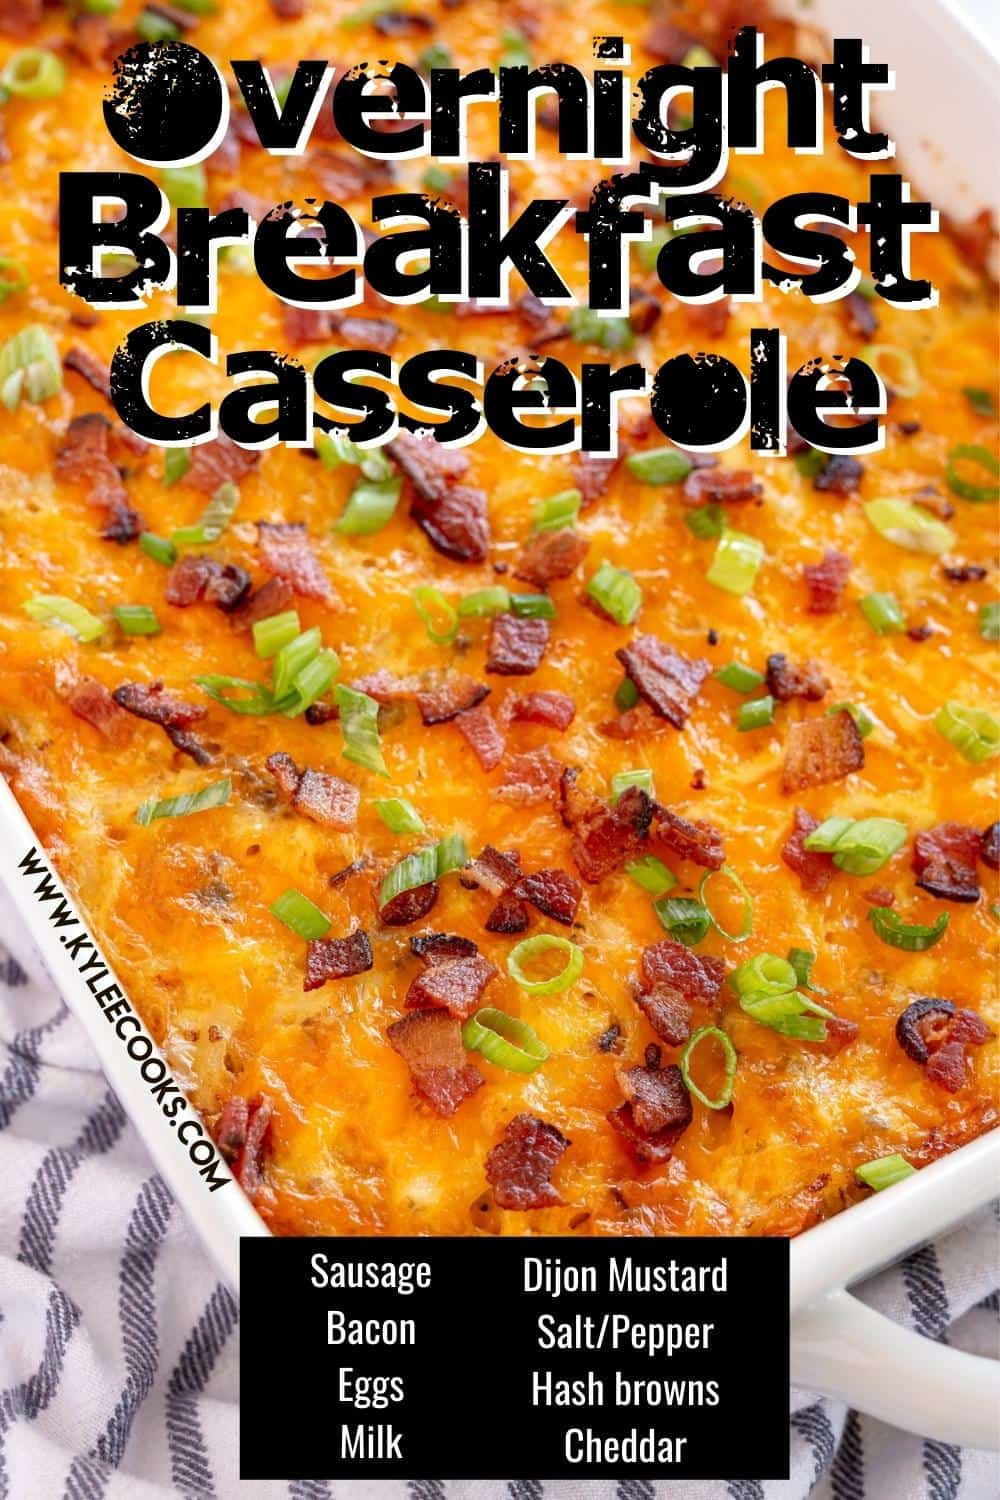 overnight breakfast casserole with text overlaid